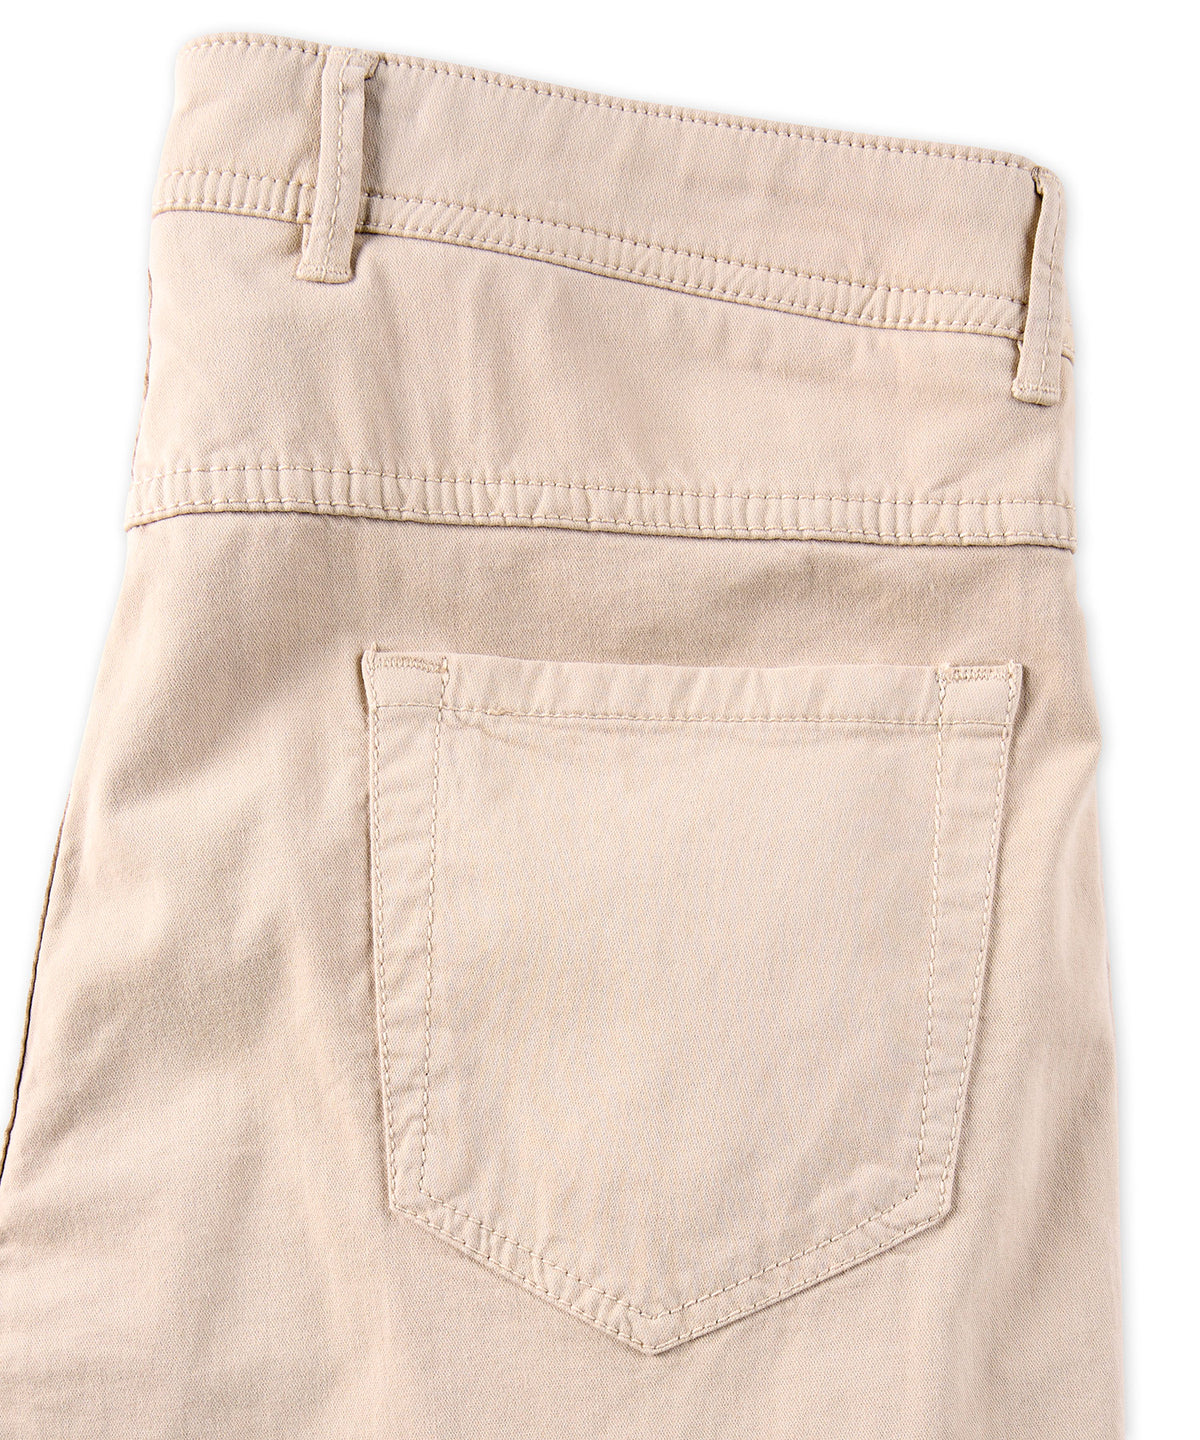 Cotton Stretch Broken Twill 5-Pocket Pant